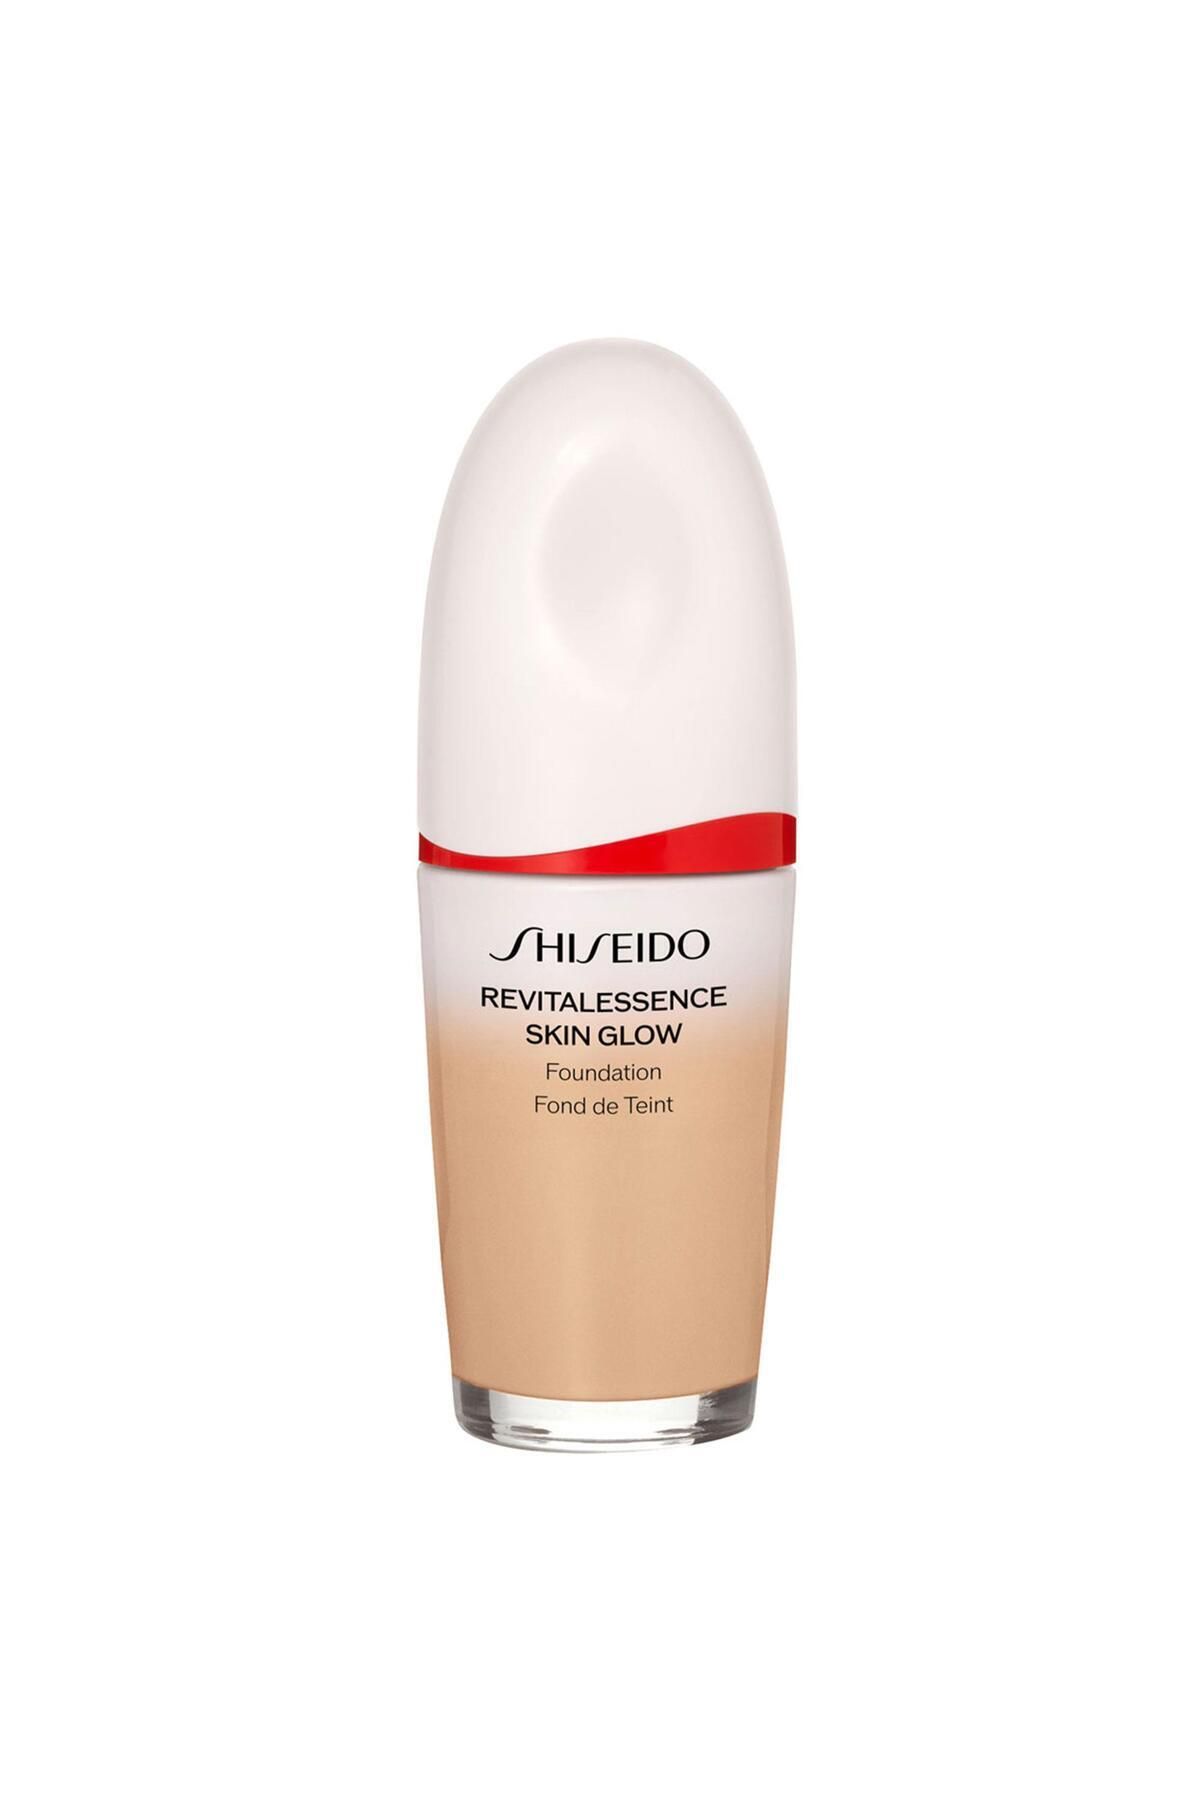 Shiseido Revıtalessence Skın Glow Foundatıon Spf 30 Pa 240